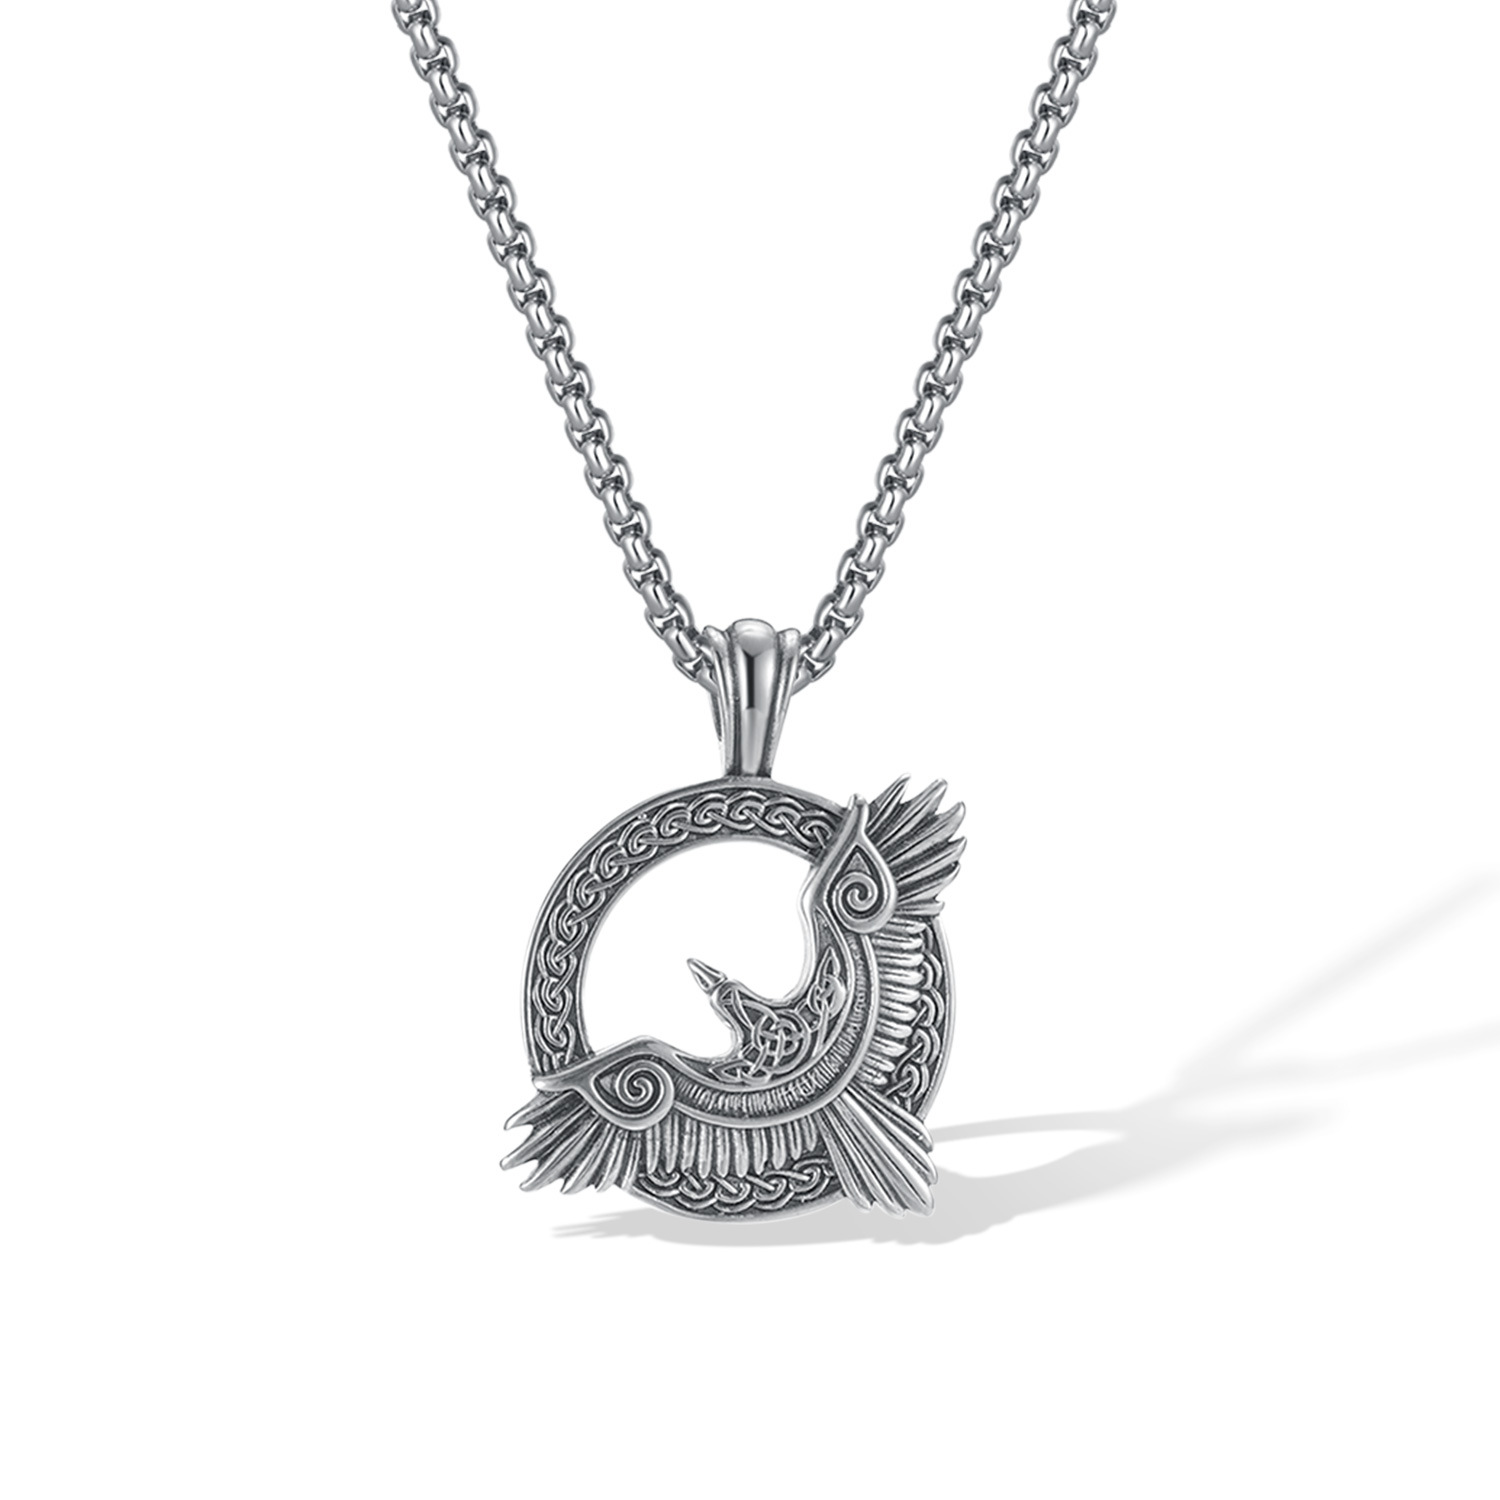 Steel pendant with chain 3x55cm